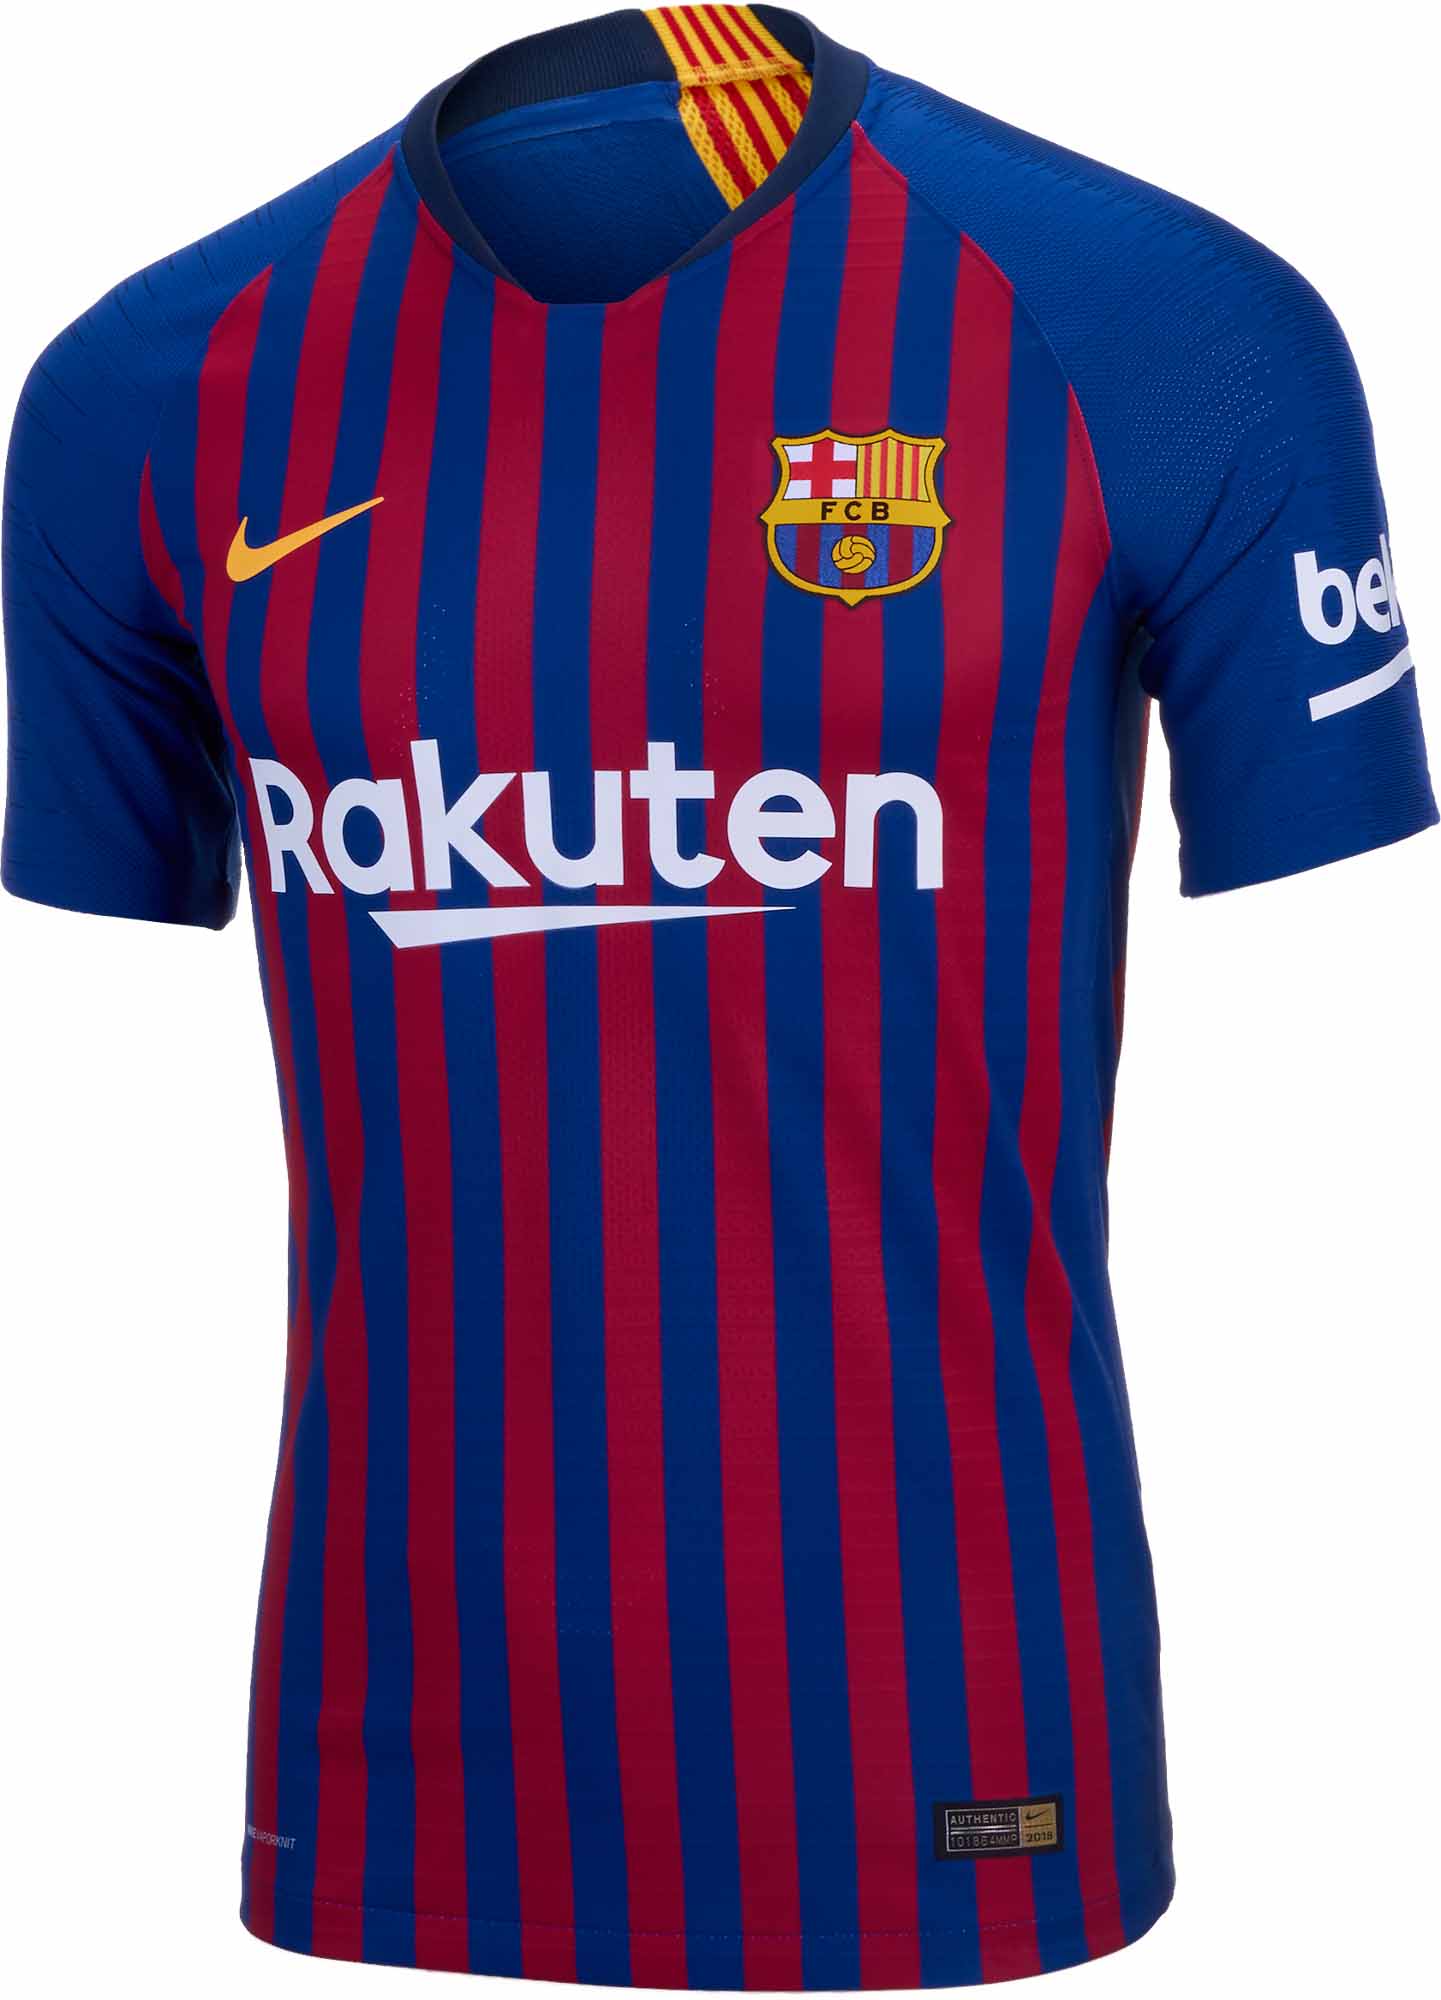 2018/19 Nike Barcelona Home Match Jersey - SoccerPro